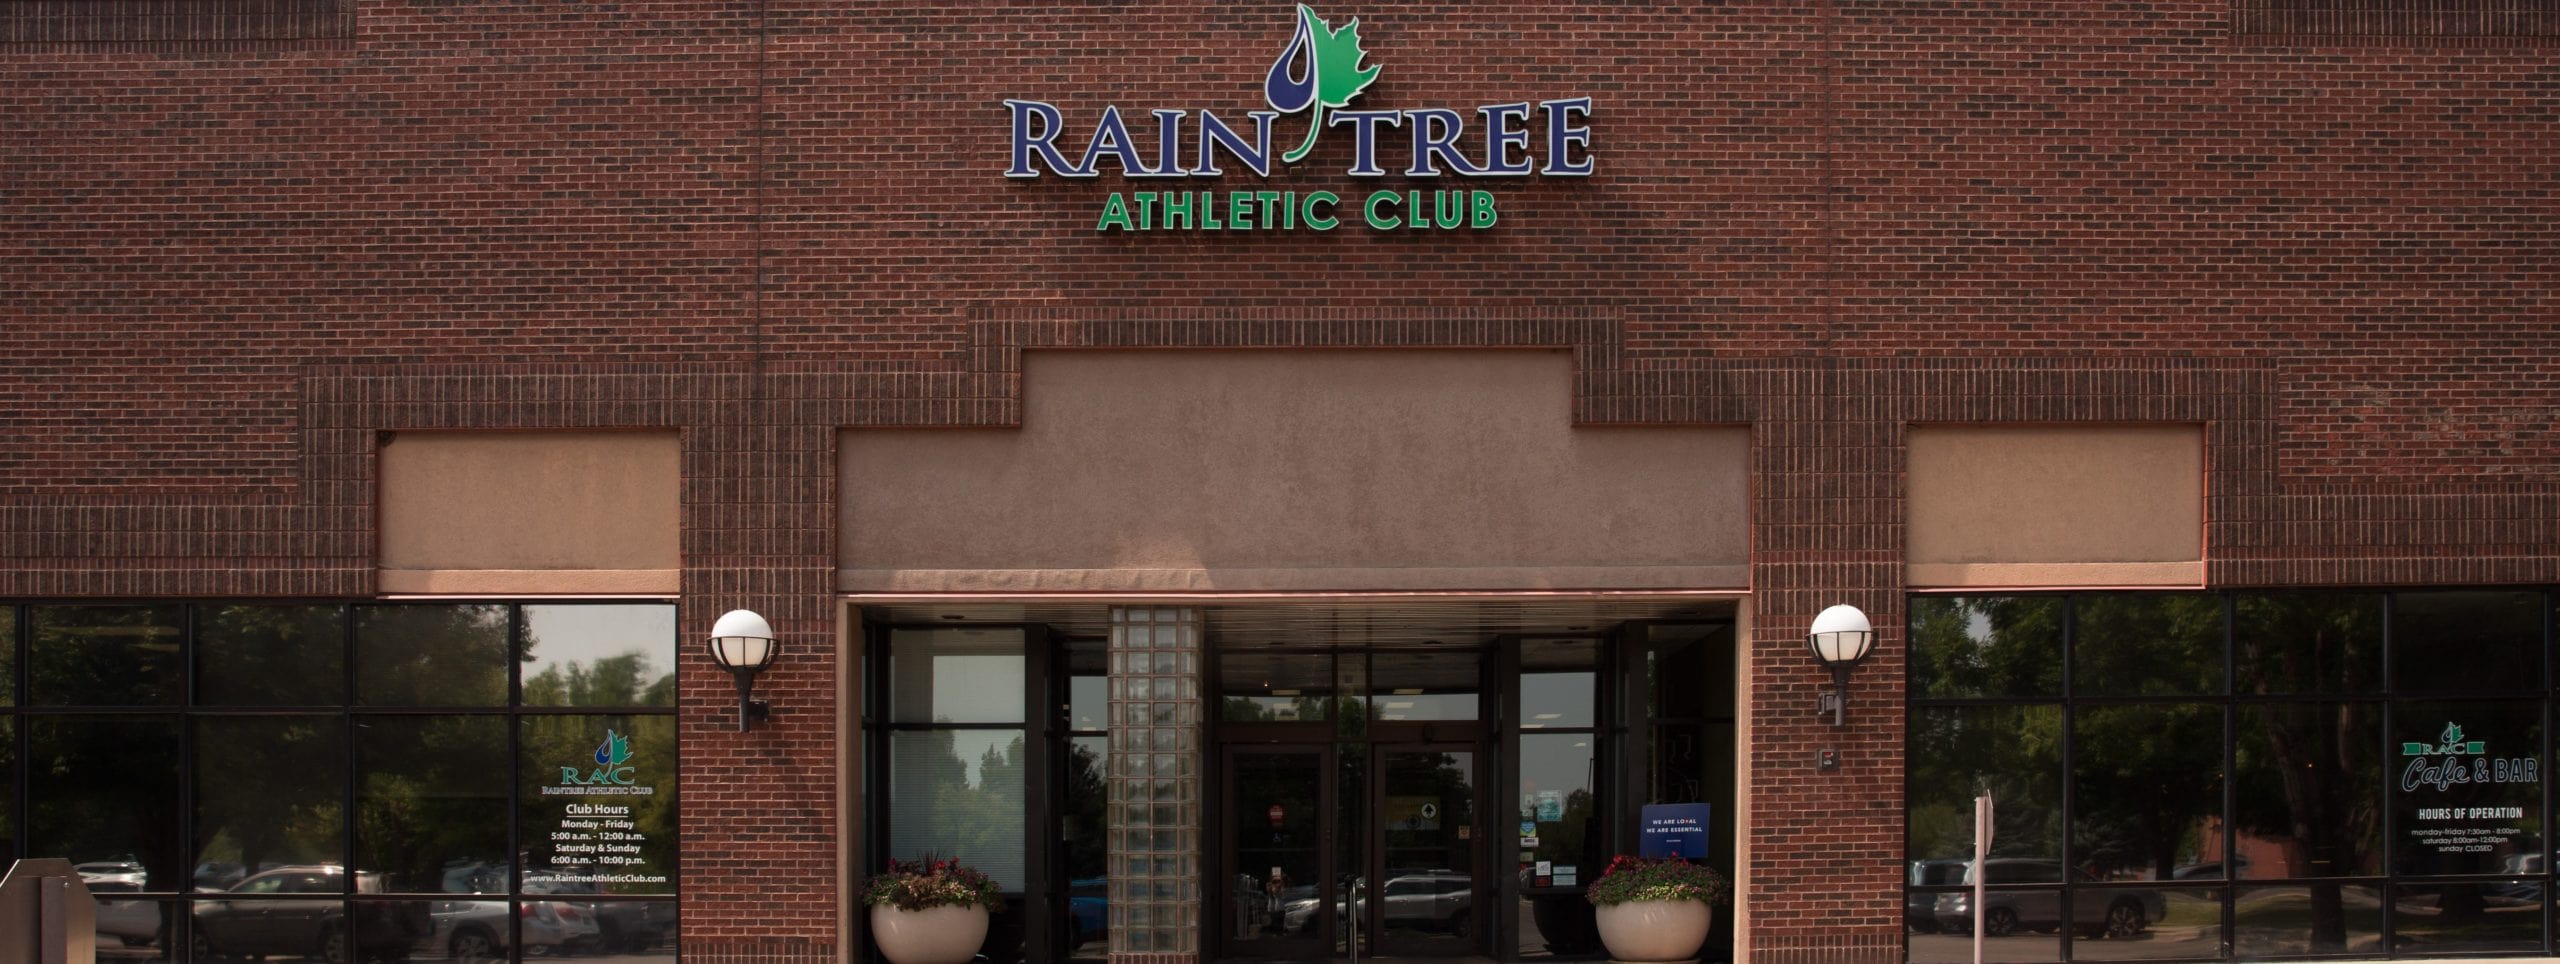 Raintree Athletic Club main entrance